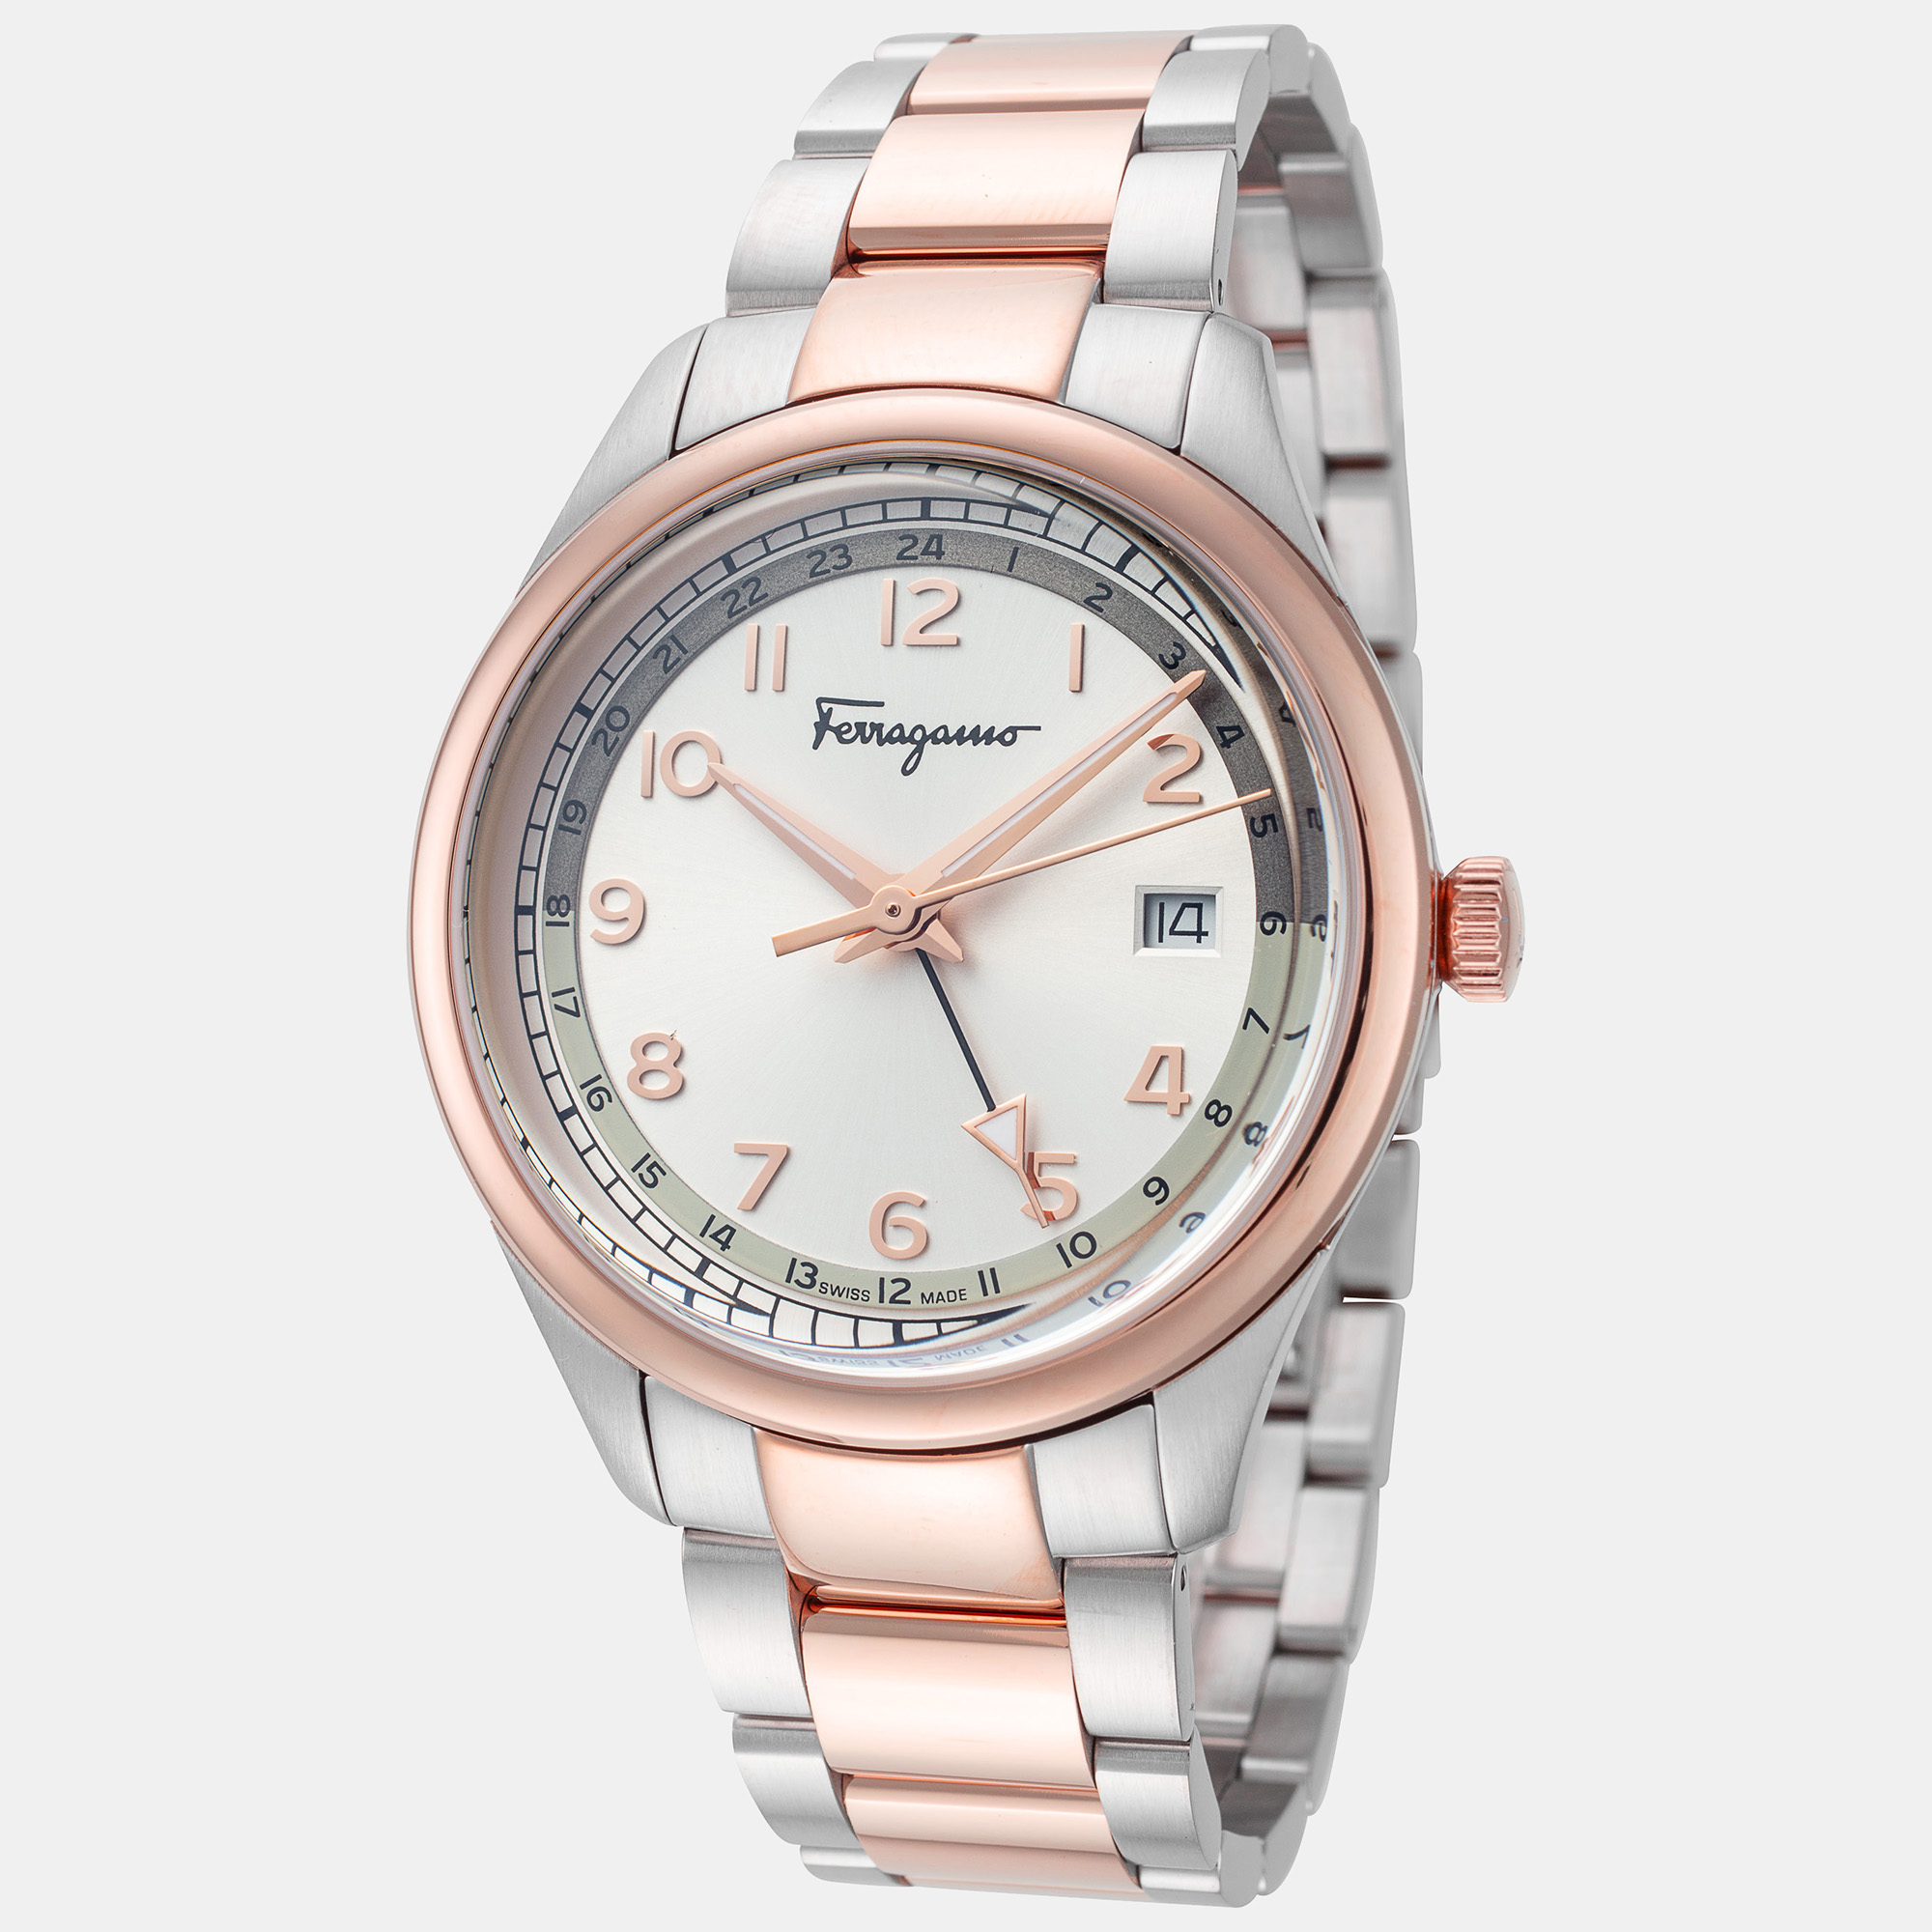 Salvatore ferragamo ferragamo men's timeless 40mm quartz watch sfmu00522